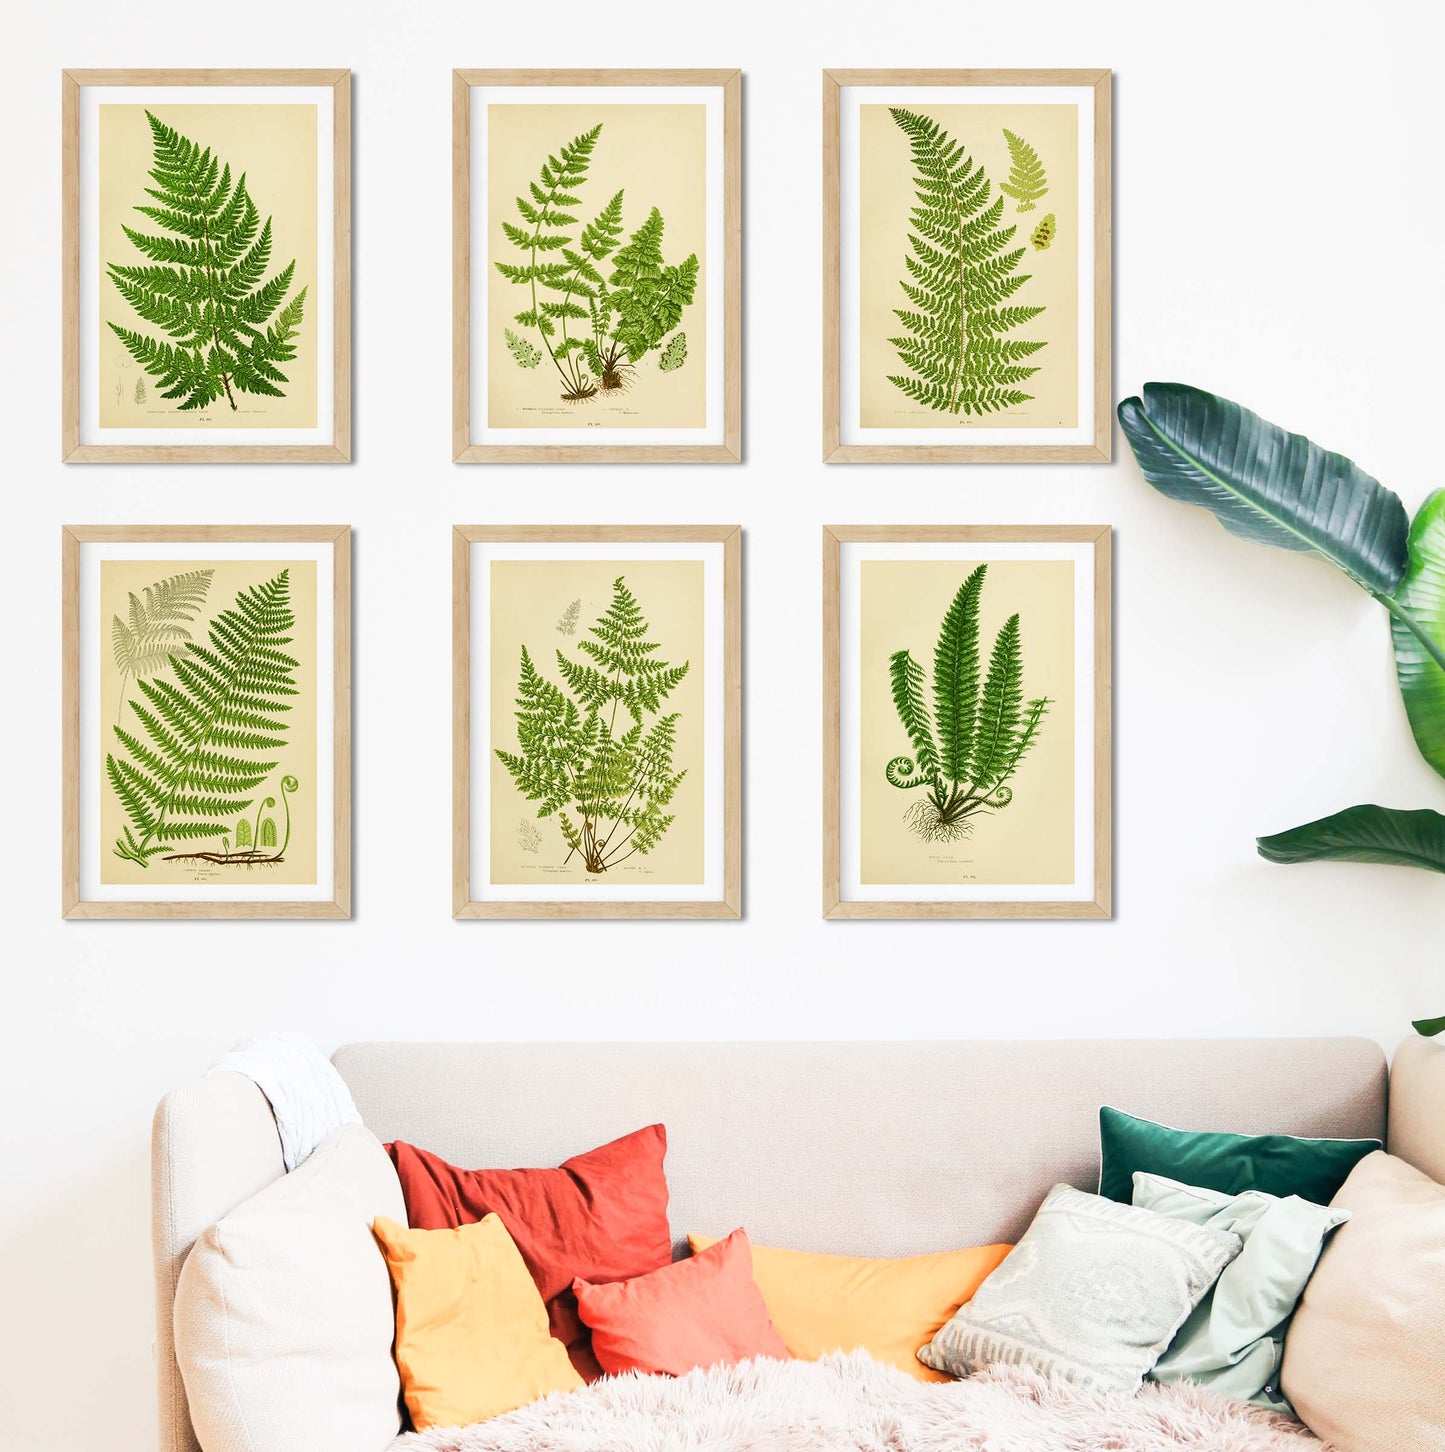 Vintage green fern print, Fern wall art botanical leaf prints No. 2 of 6 botanical prints